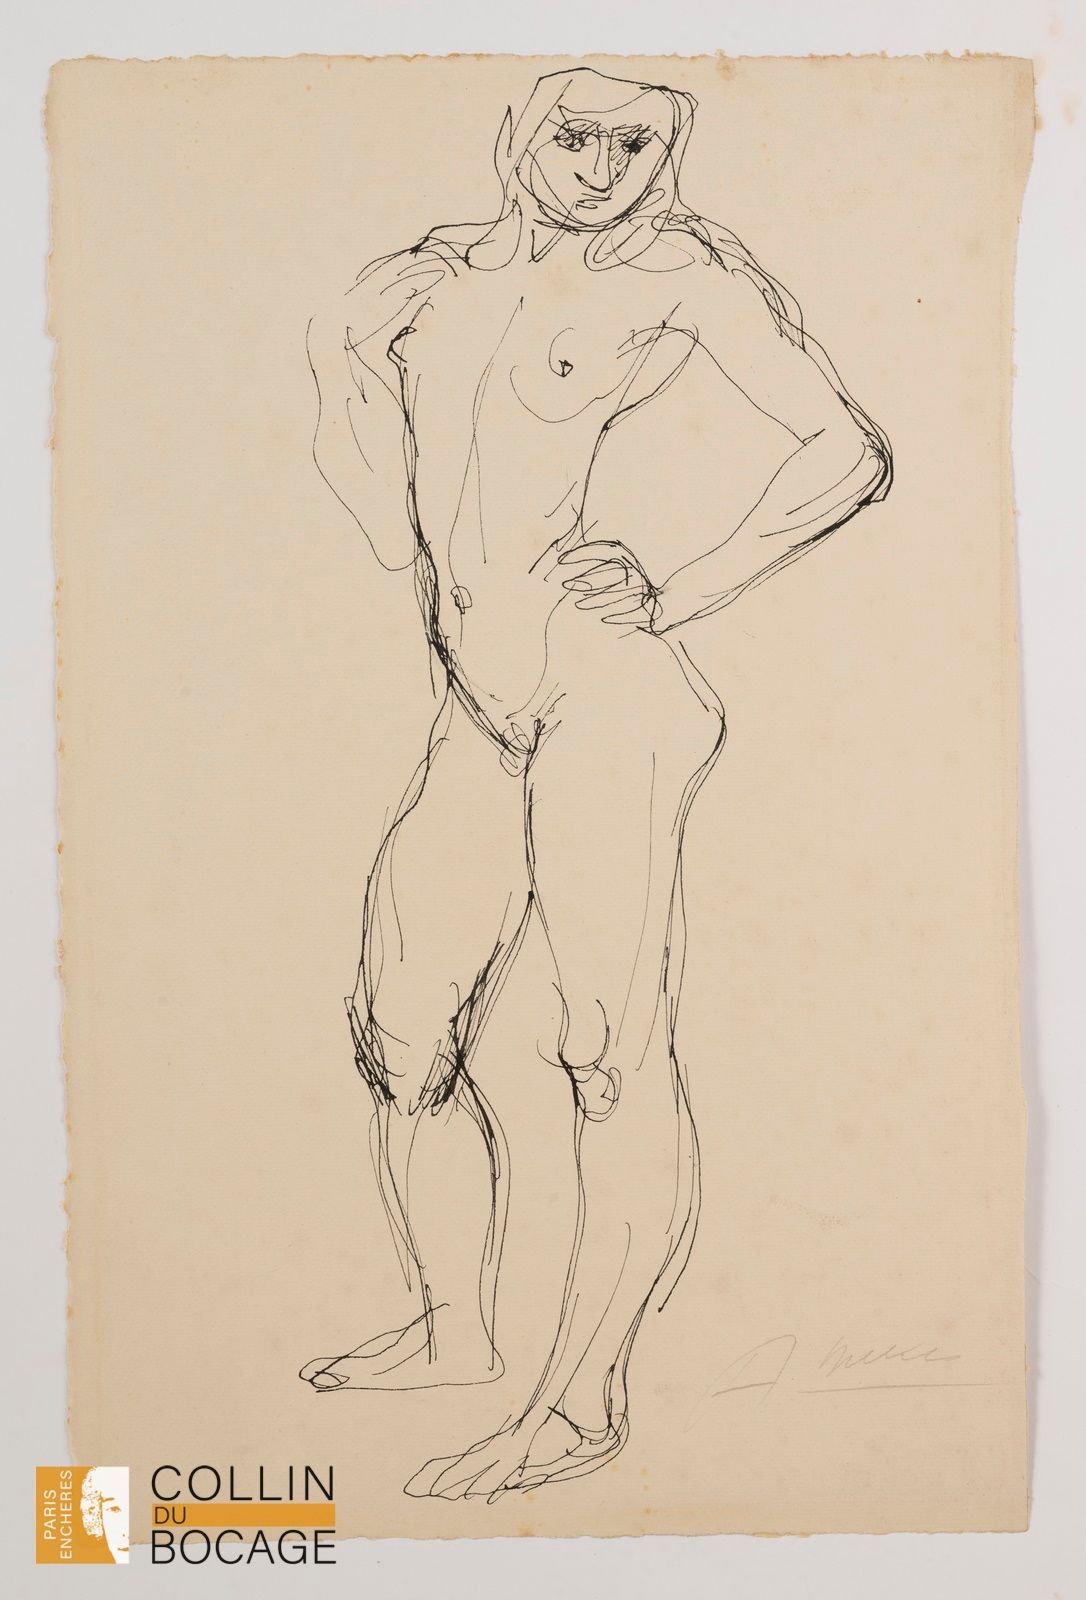 Null Arno BREKER（1900-1991 年）归于 
反姿势裸体研究
墨水
右下方有铅笔签名
48 x 32 厘米